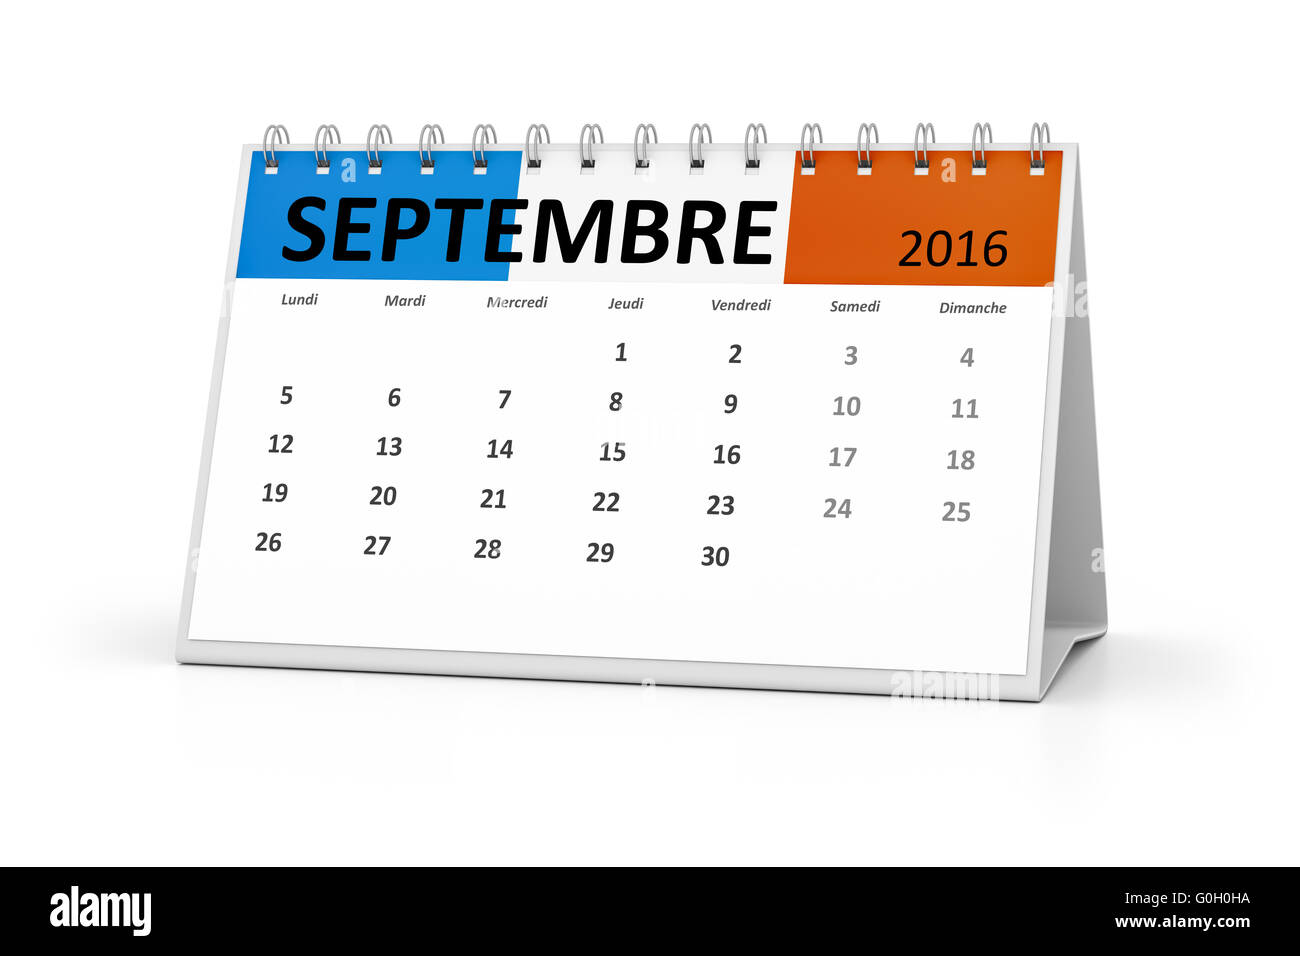 french language table calendar 2016 september Stock Photo